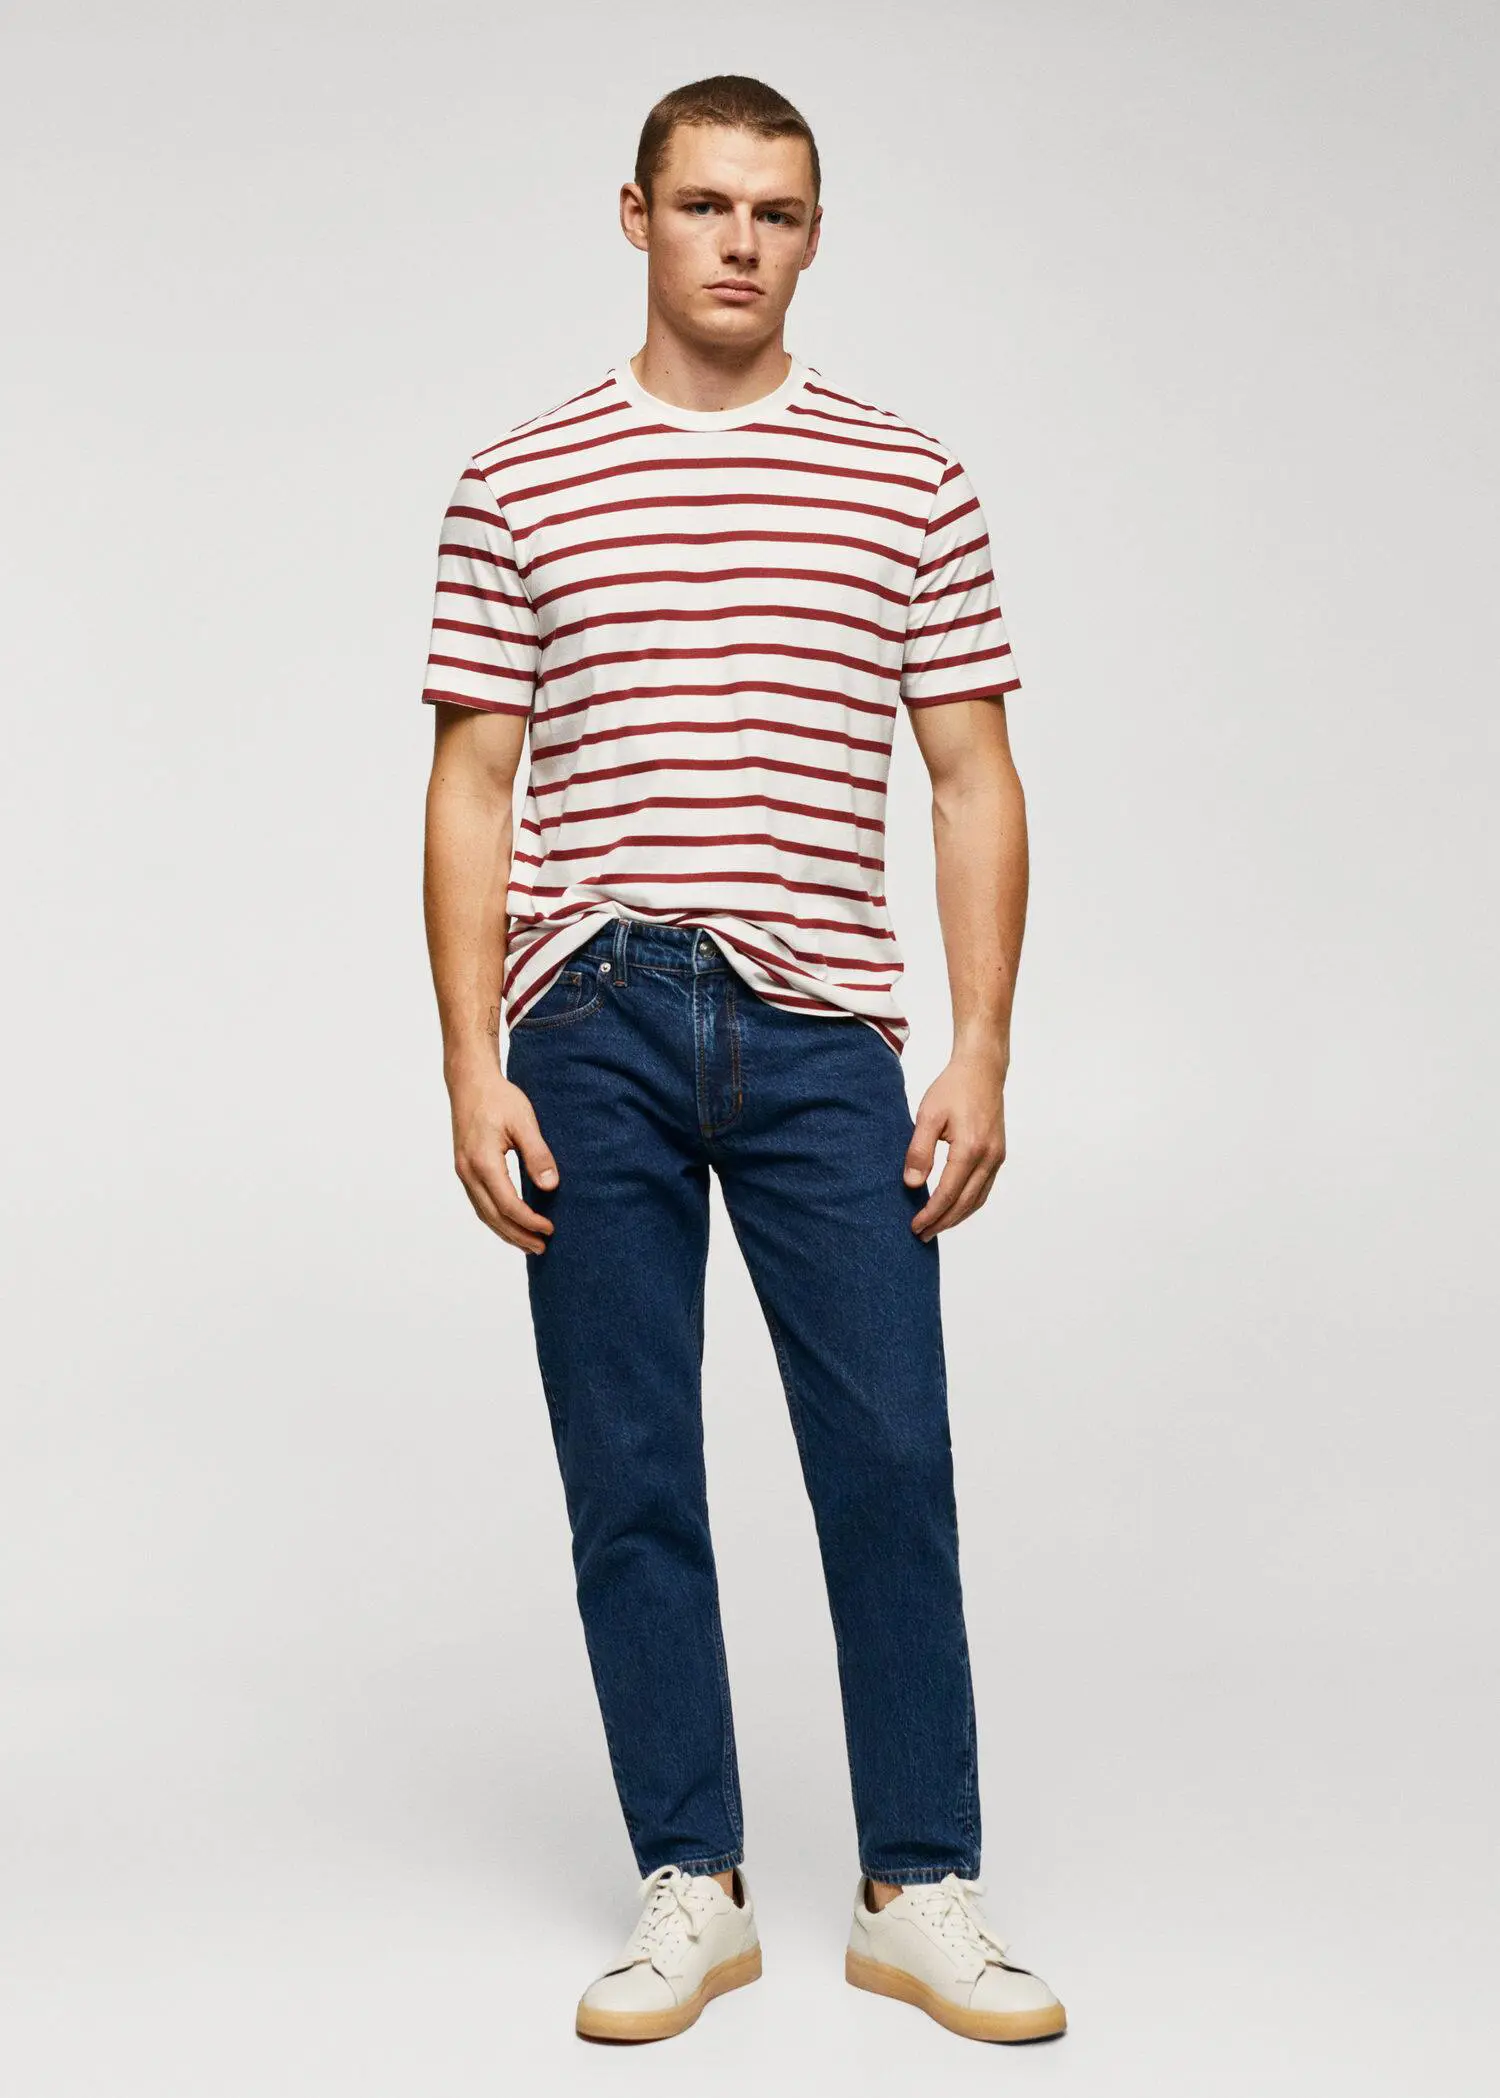 Mango Cotton-modal striped t-shirt. a man wearing a striped shirt and jeans. 